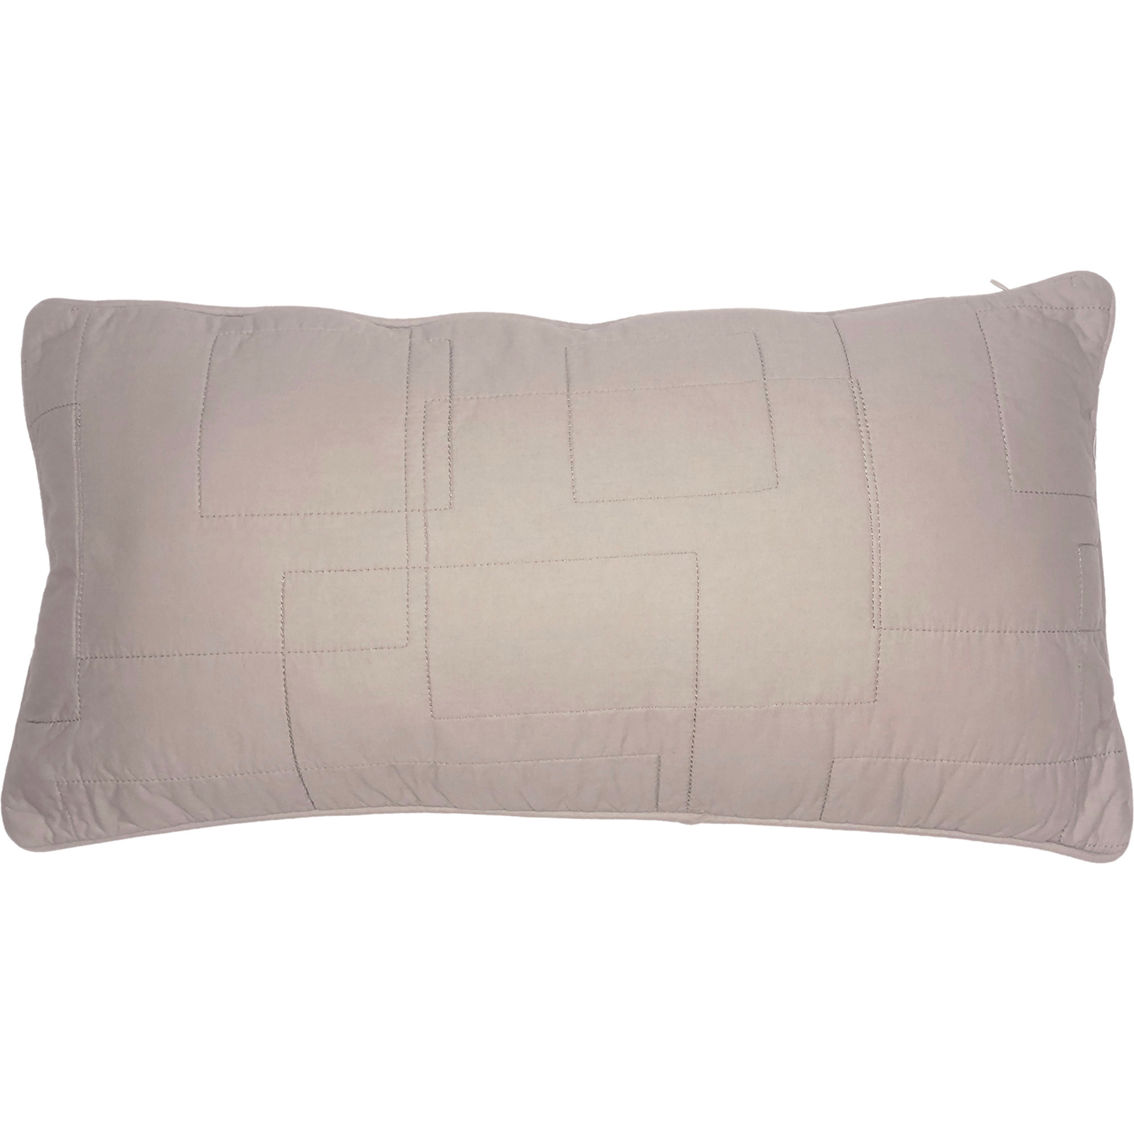 Donna Sharp Smoky Rectangle Decorative Pillow - Image 2 of 2